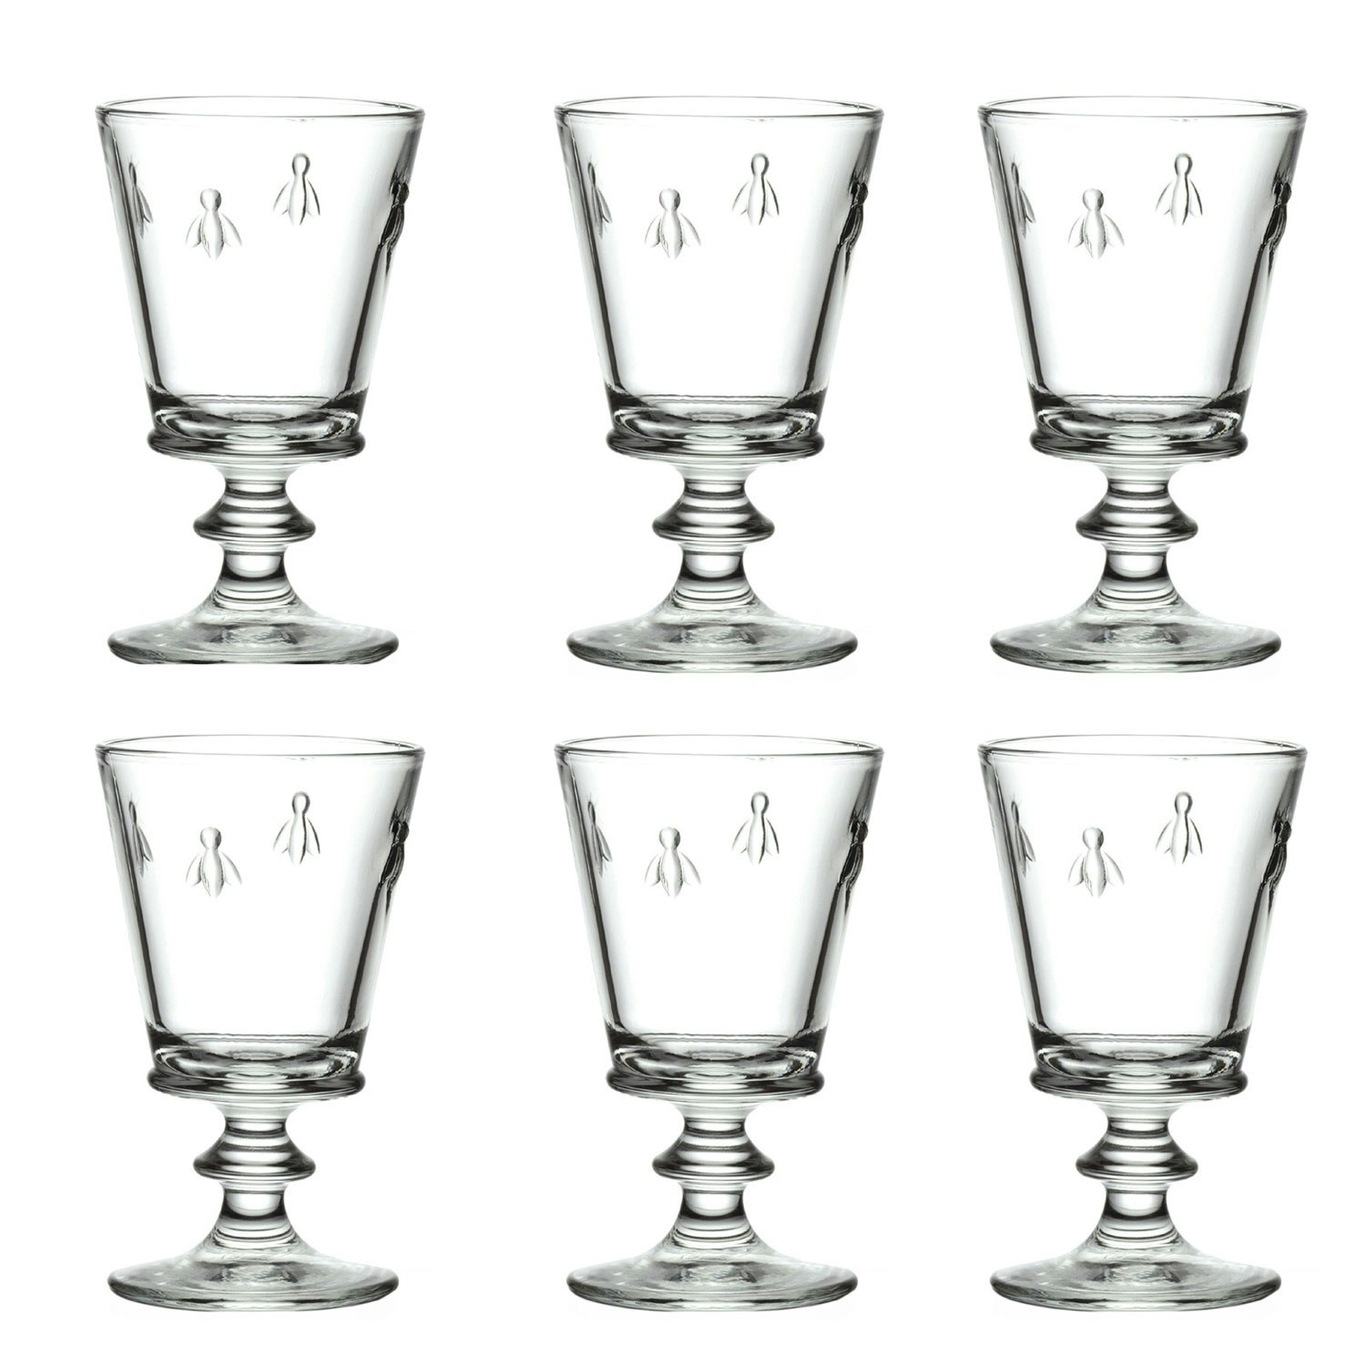 https://royaldesign.com/image/2/la-rochere-abeille-wine-glass-6-pack-0?w=800&quality=80